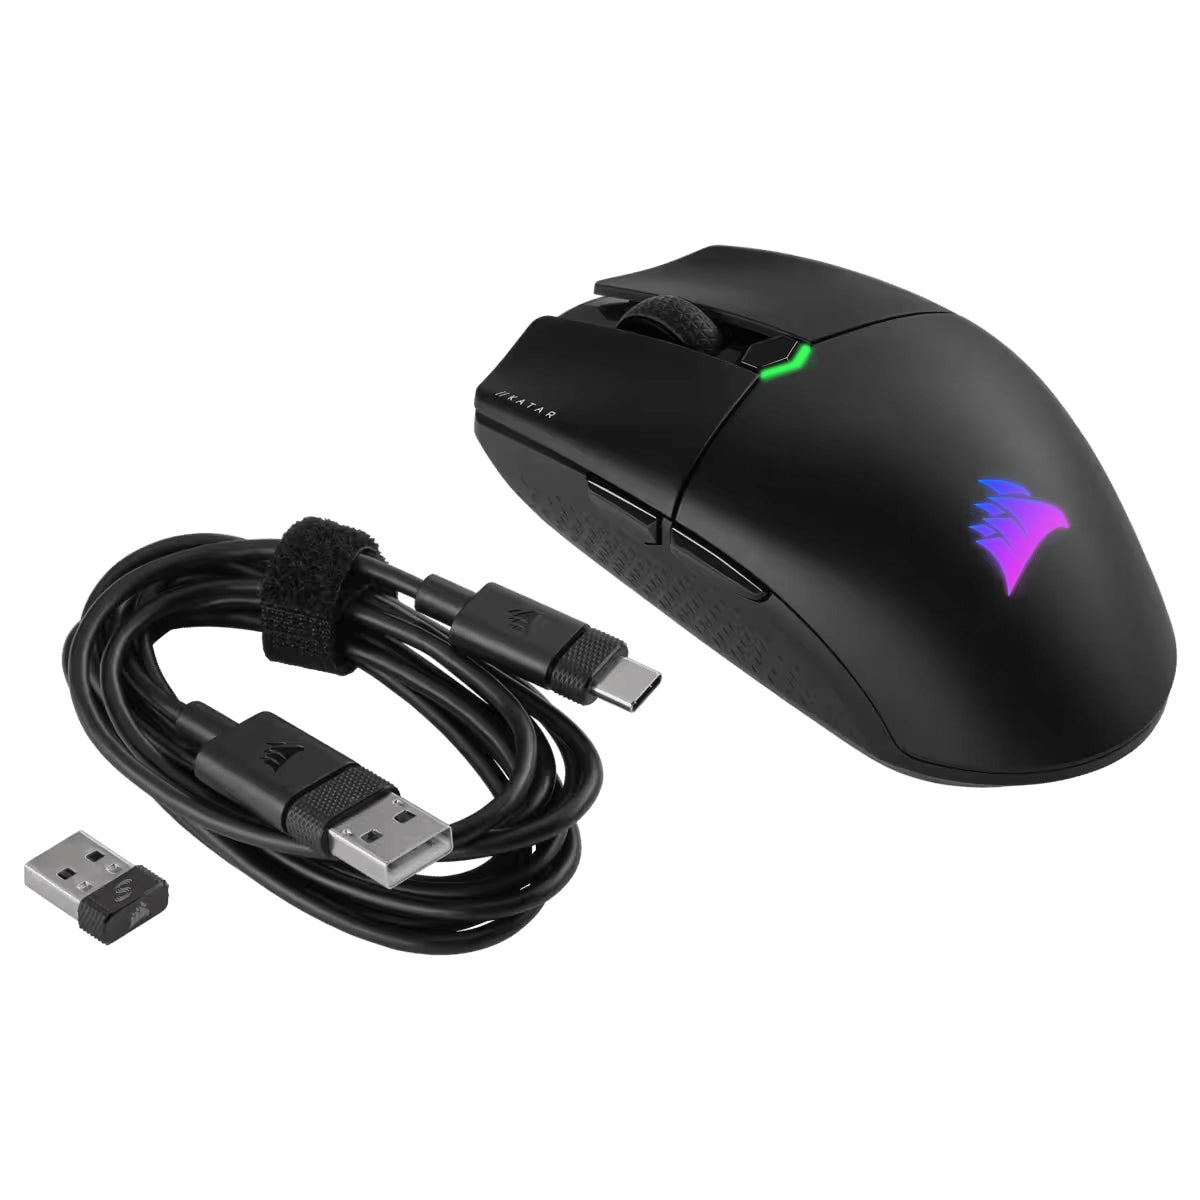 CORSAIR Katar Elite iCUE RGB Optical Gaming Mouse with 26000 – JG